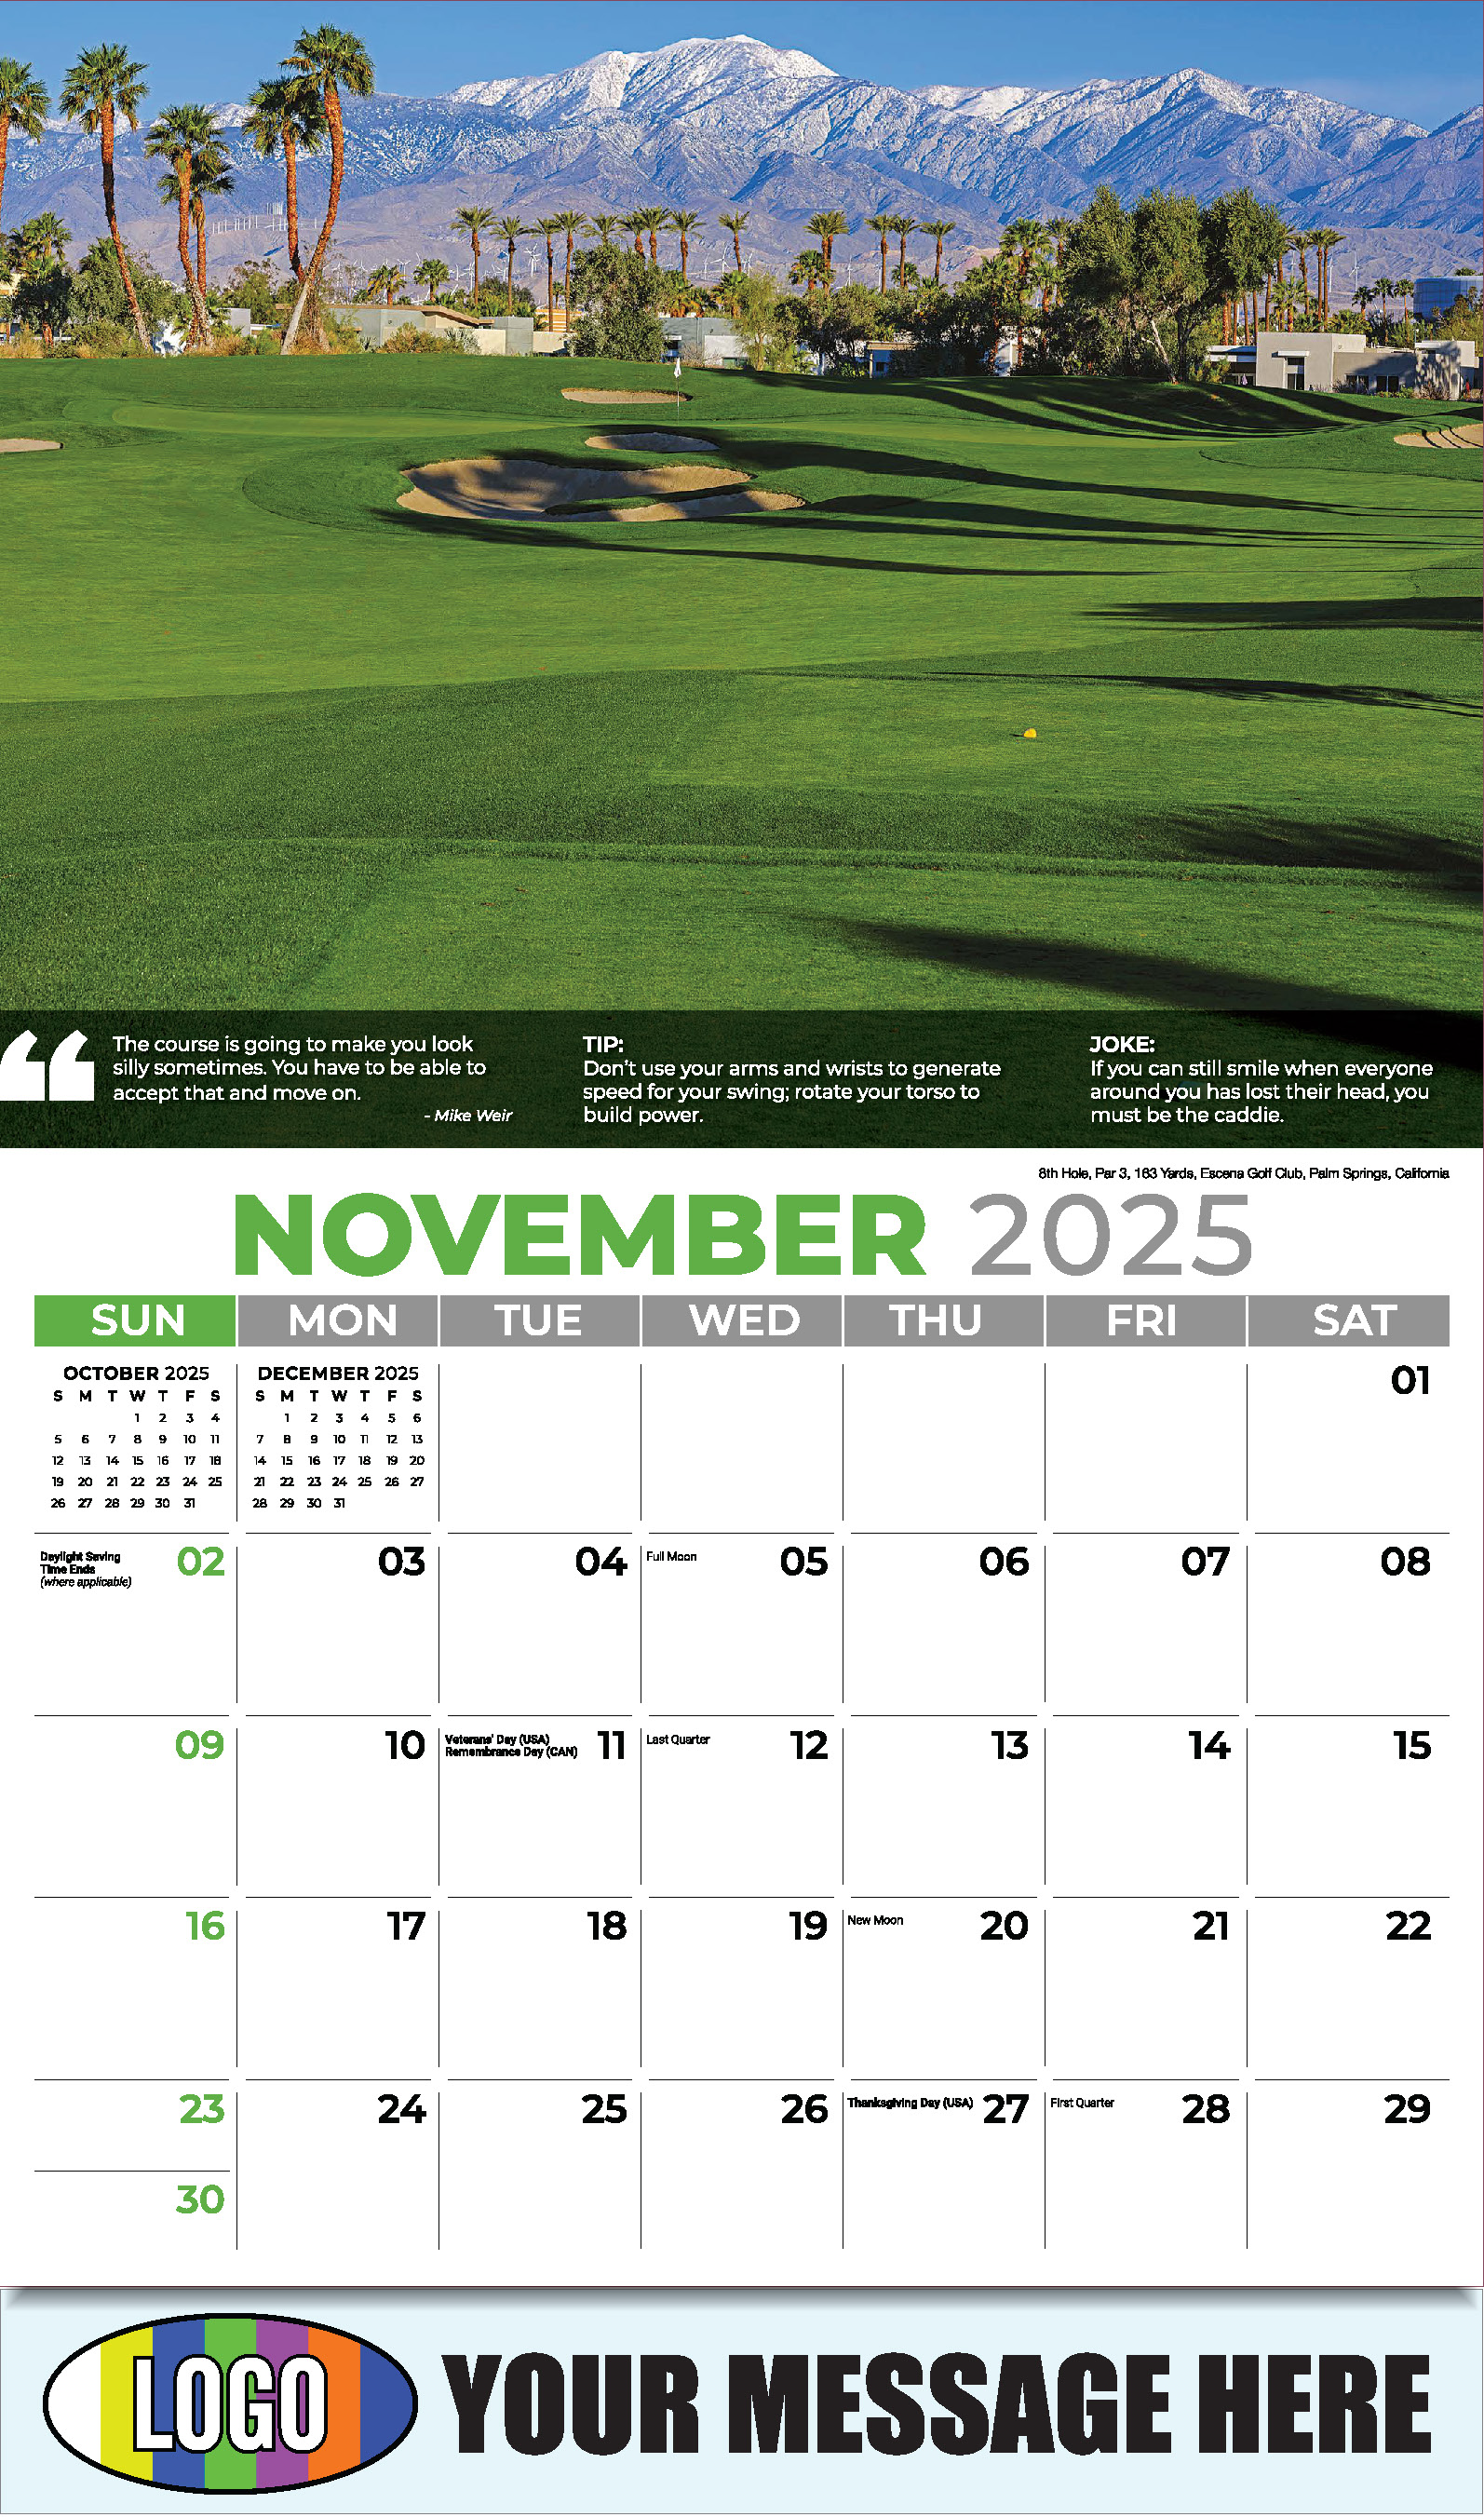 Golf Tips 2025 Business Promo Calendar - November